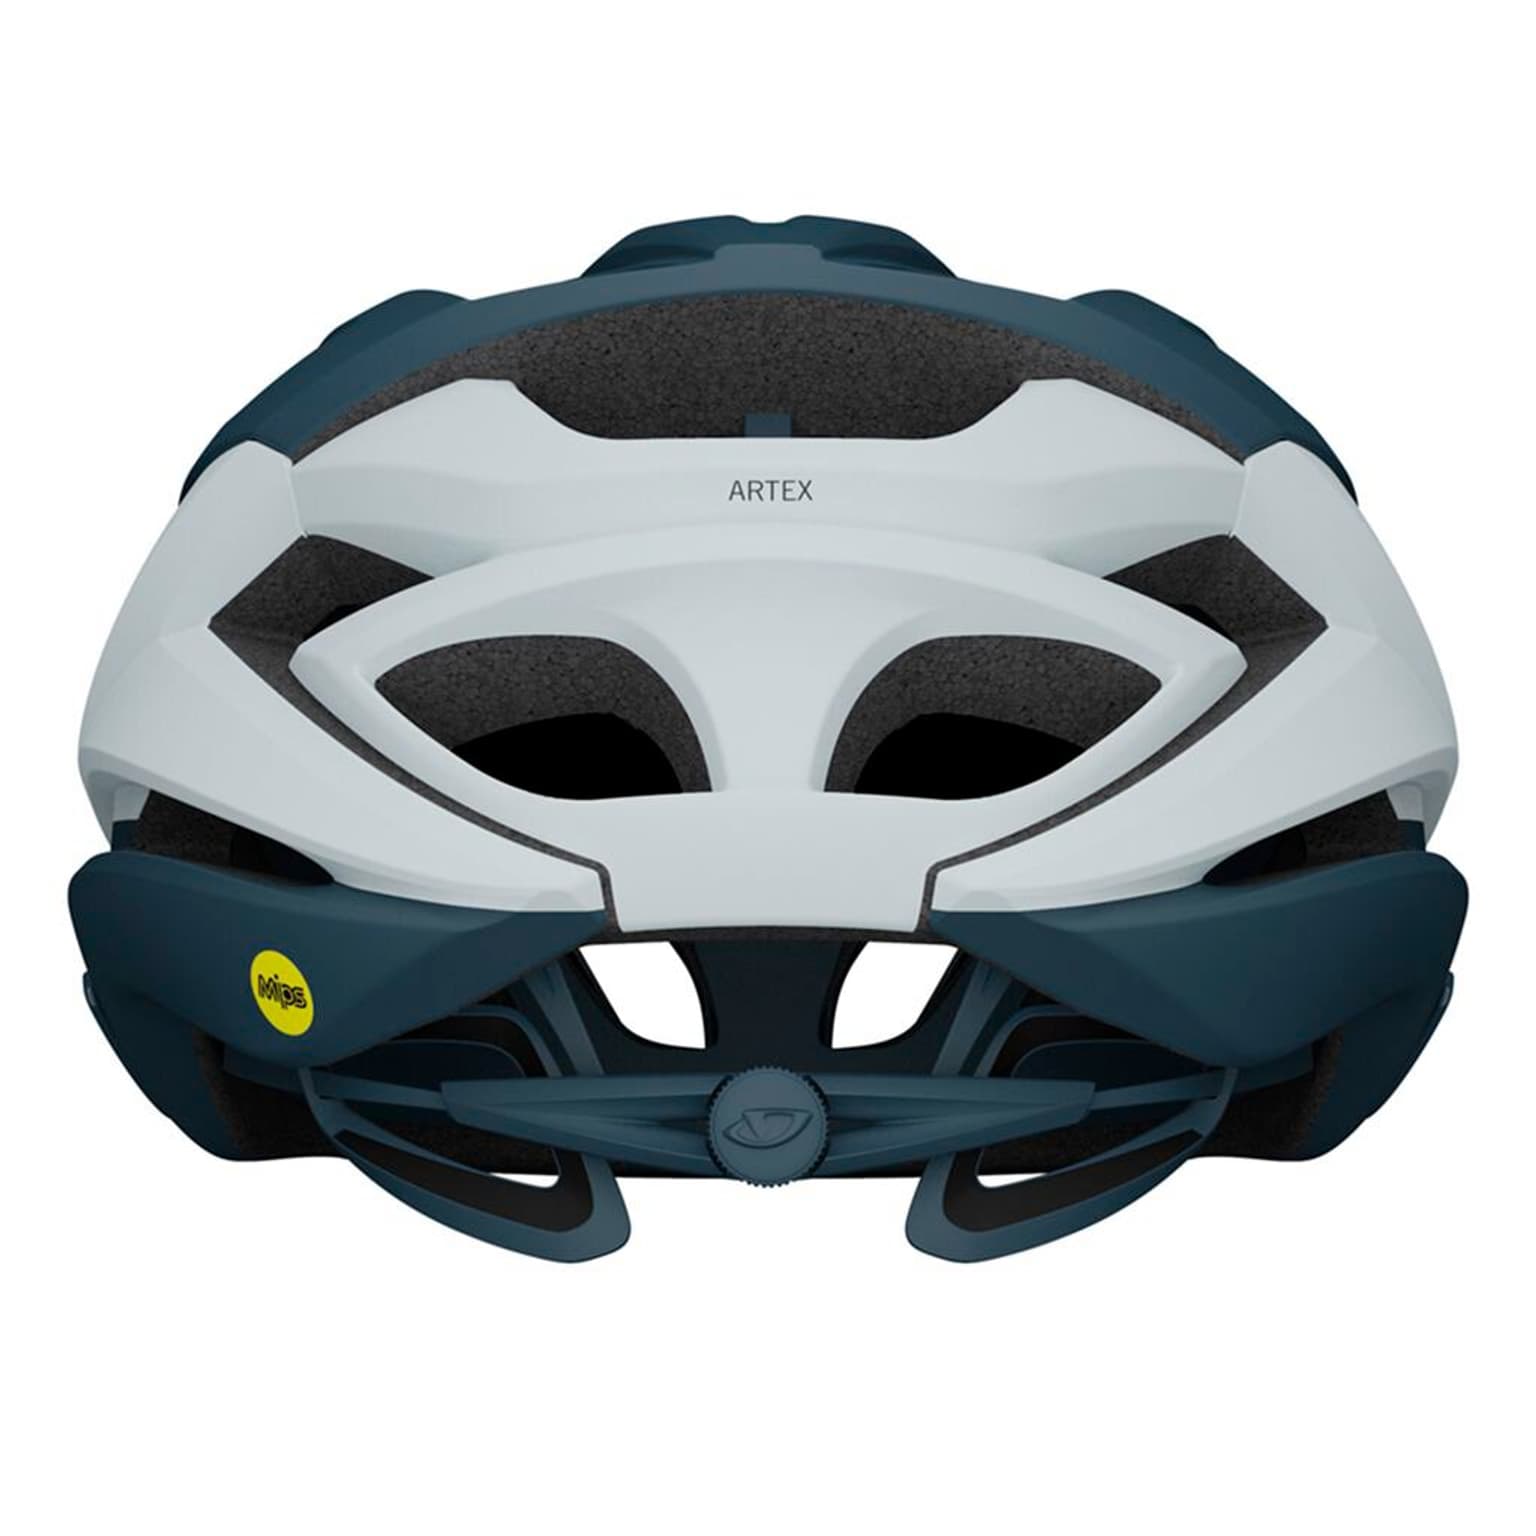 Giro Giro Artex MIPS Helmet Casque de vélo antracite 2